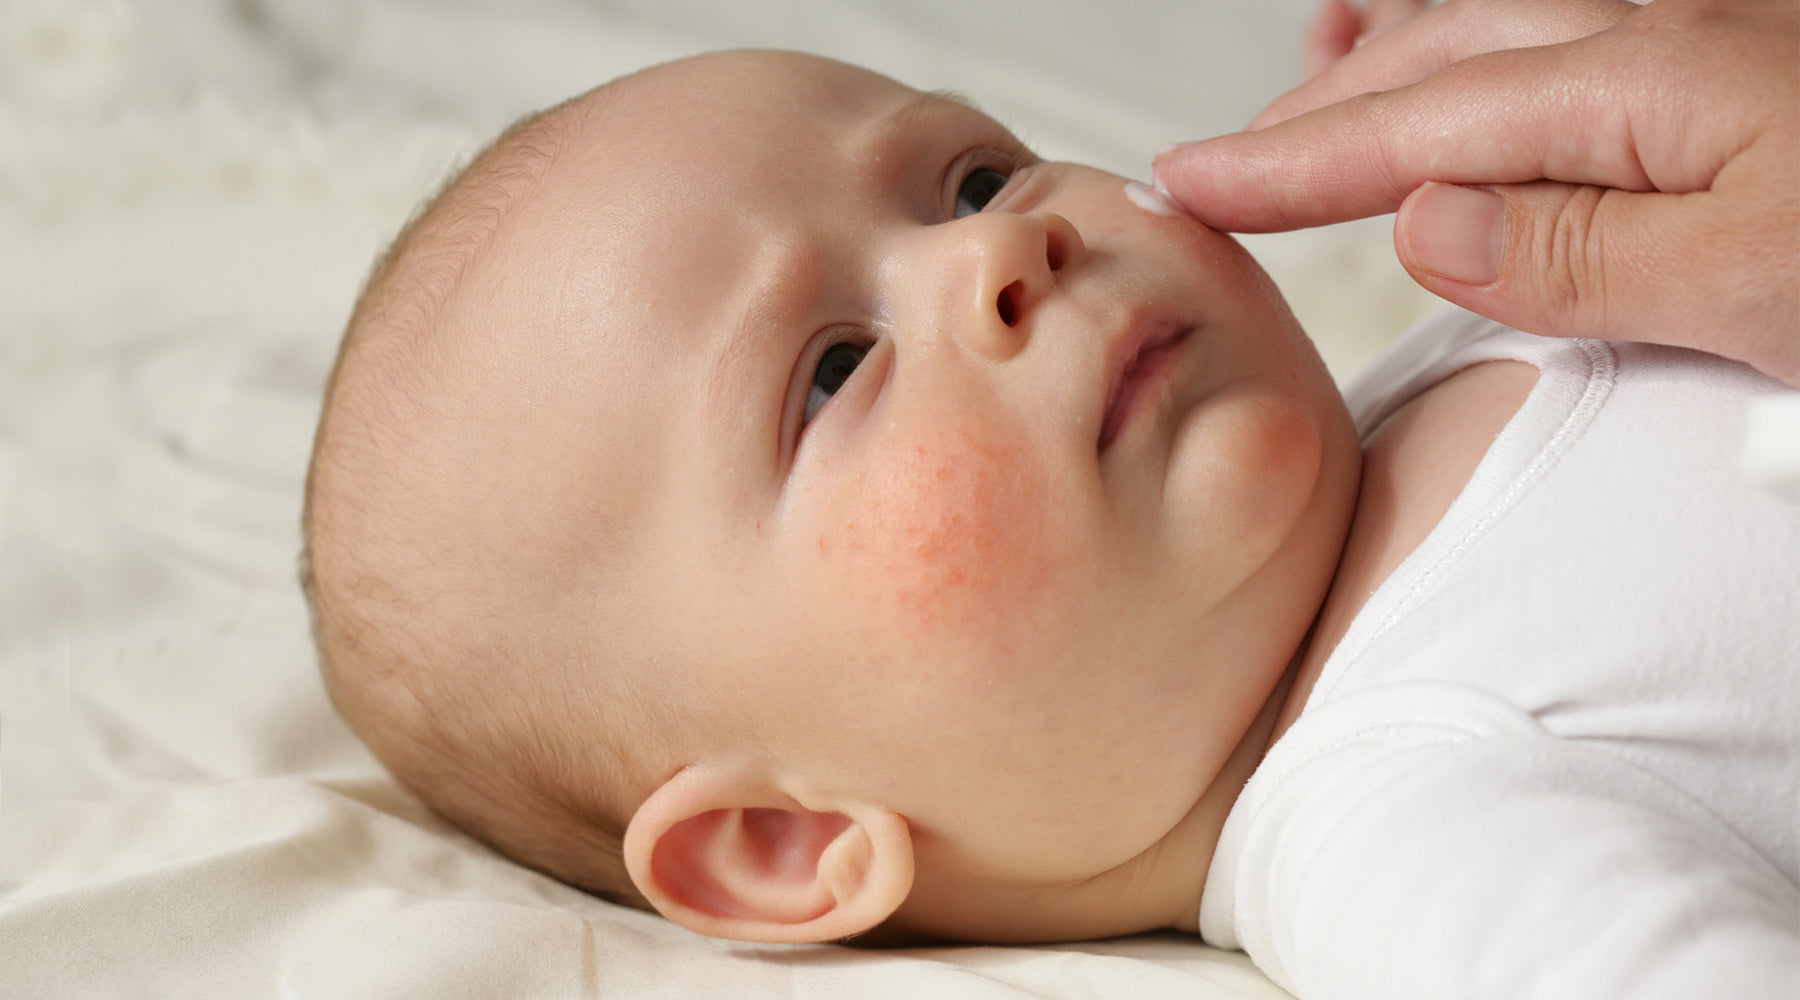 Rubbing cream on baby with eczema